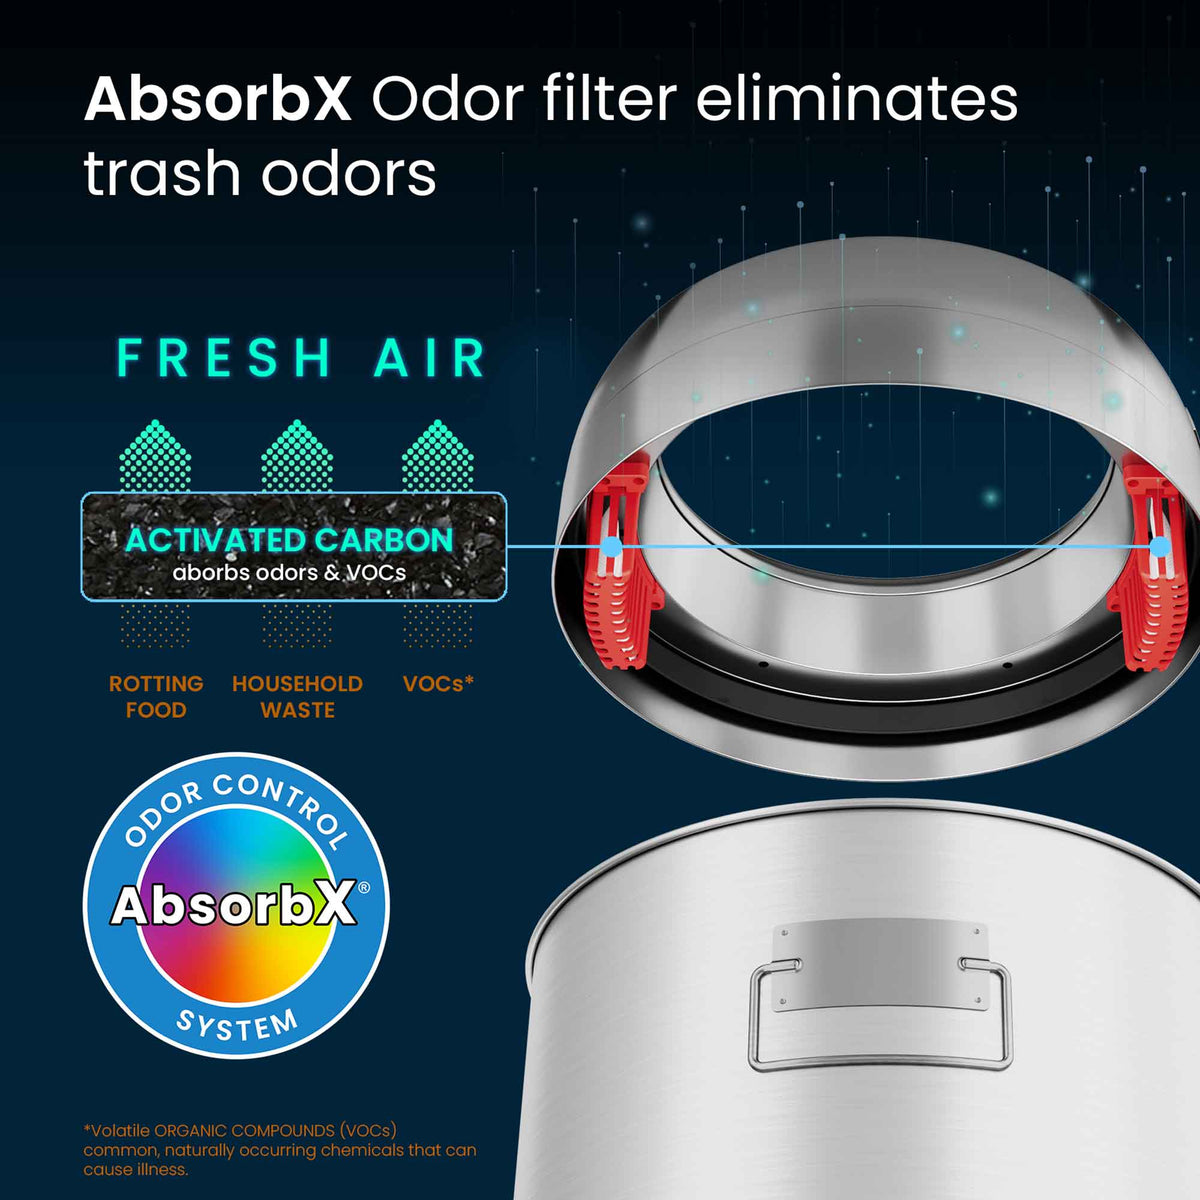 16 Gallon / 60 Liter Round Open Top Trash Can AbsorbX Odor Filter eliminates trash odors